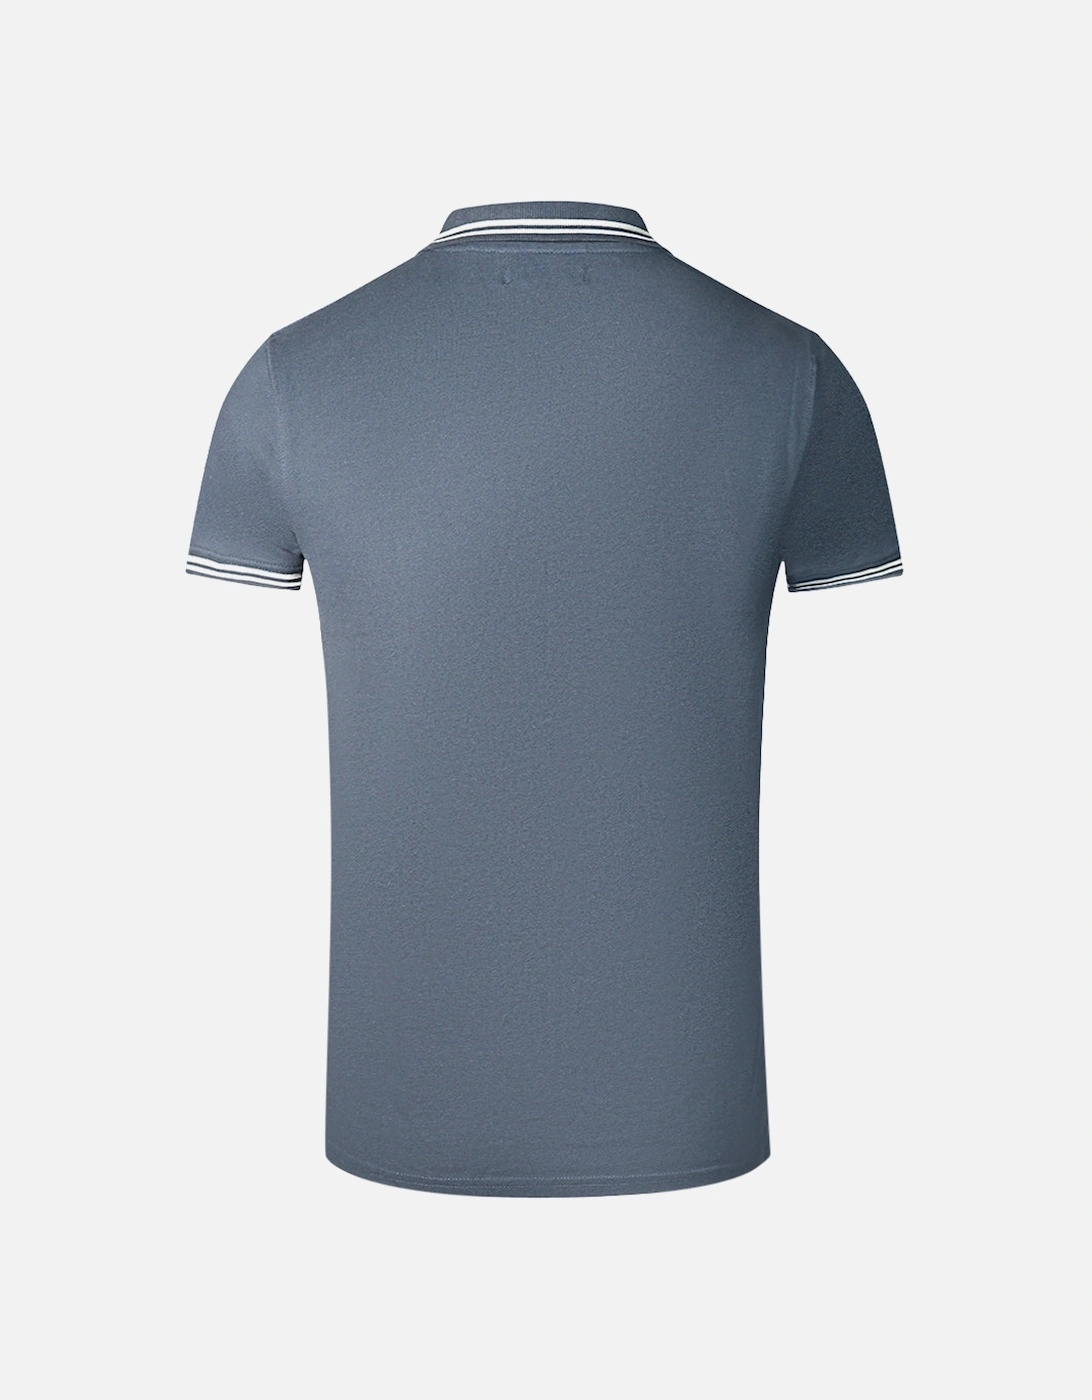 Cavalli Class Twinned Tipped Collar Black Logo Navy Blue Polo Shirt